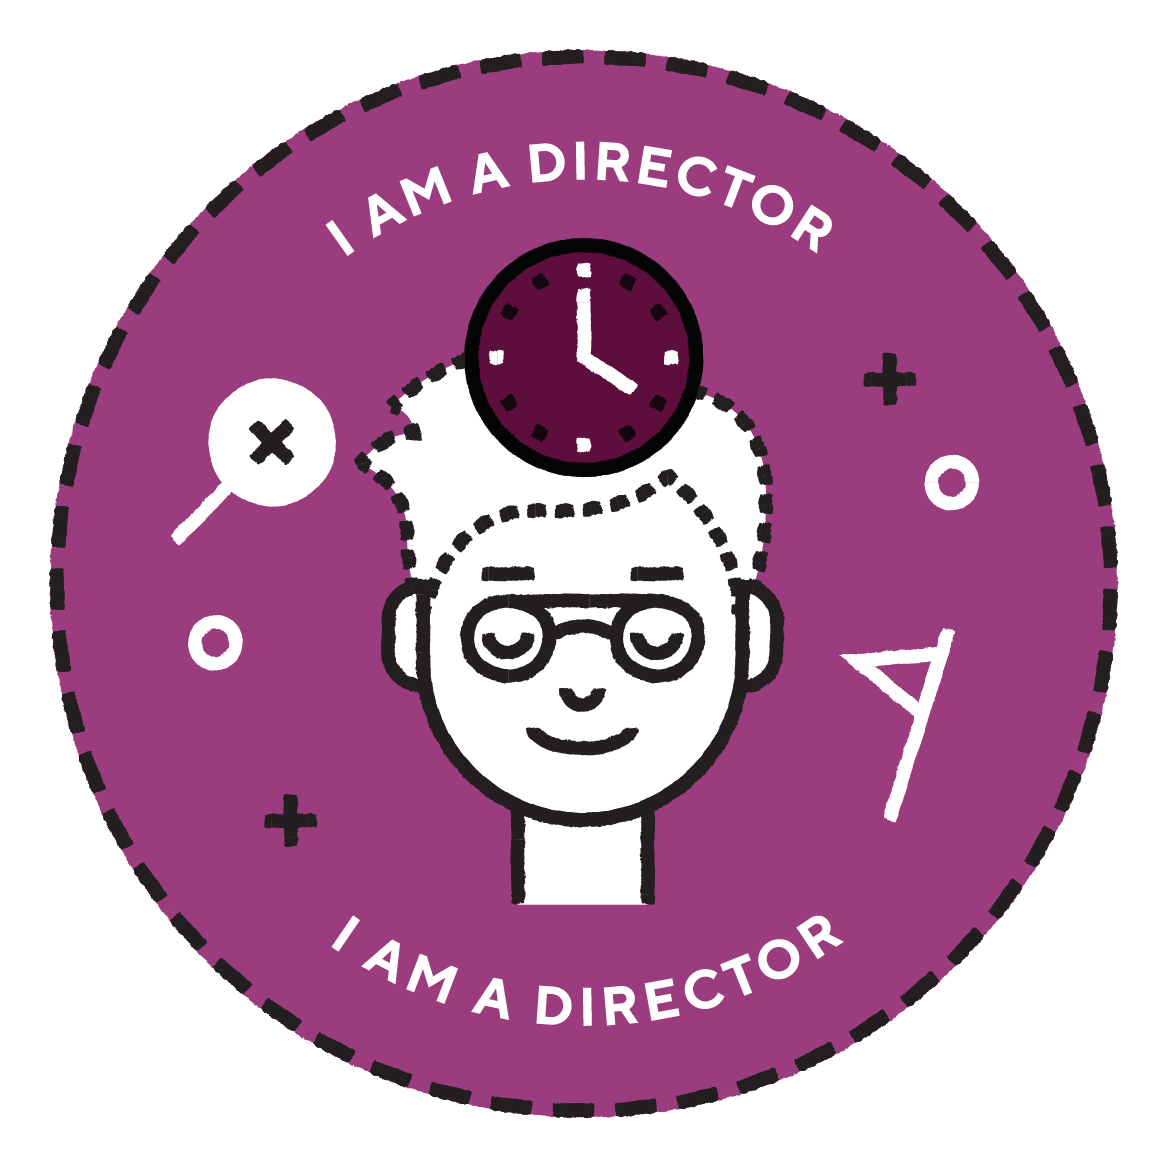 Prevan - Director (Self-employed)